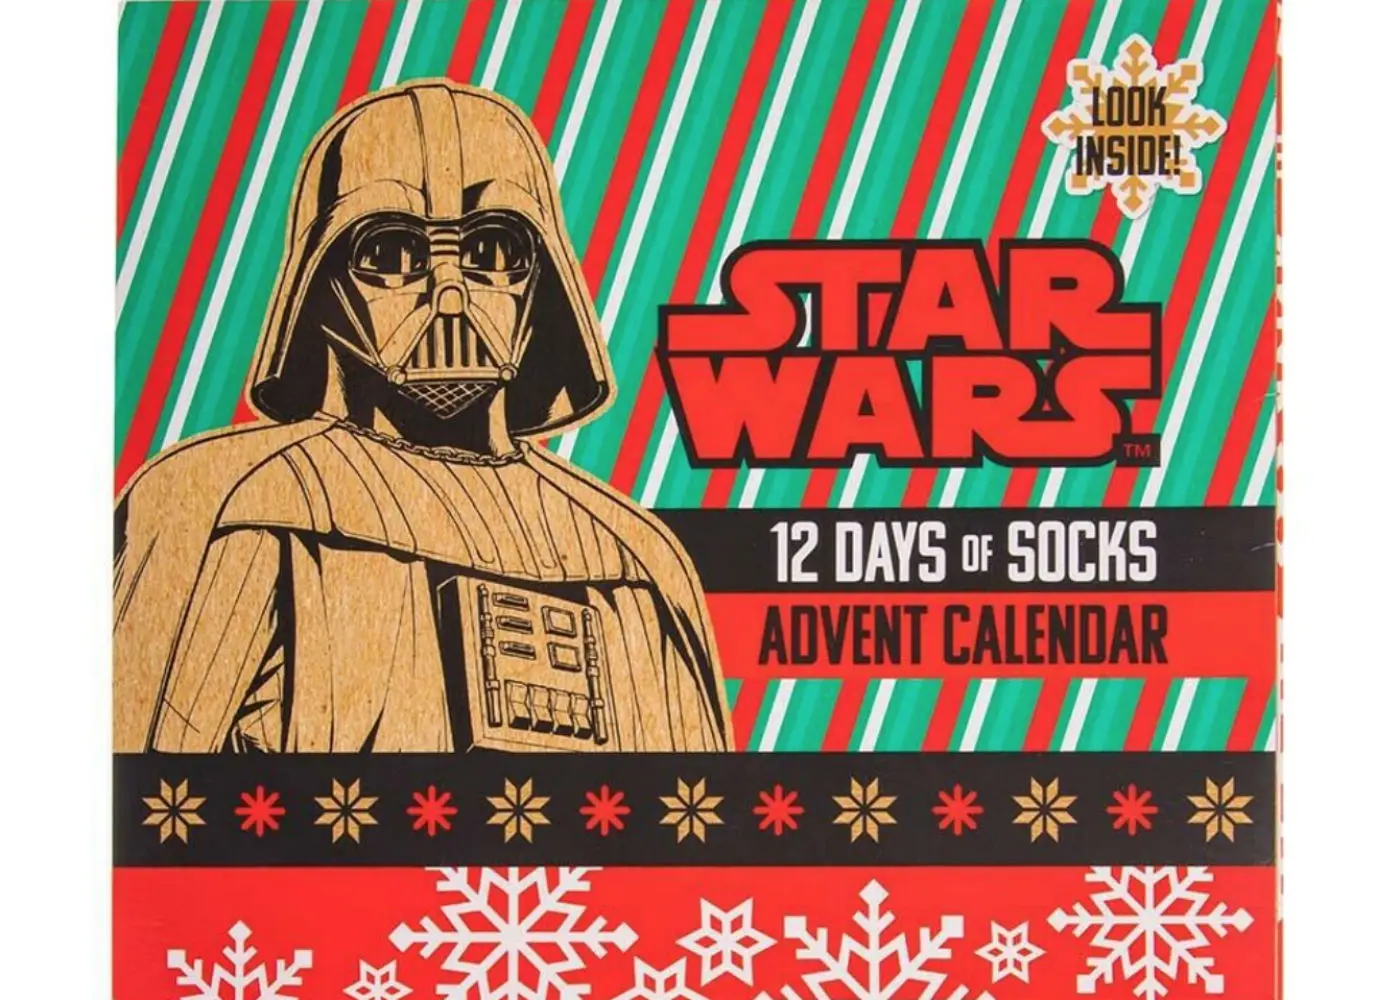 4. Star Wars 12 Days of Socks: $60 at eBay